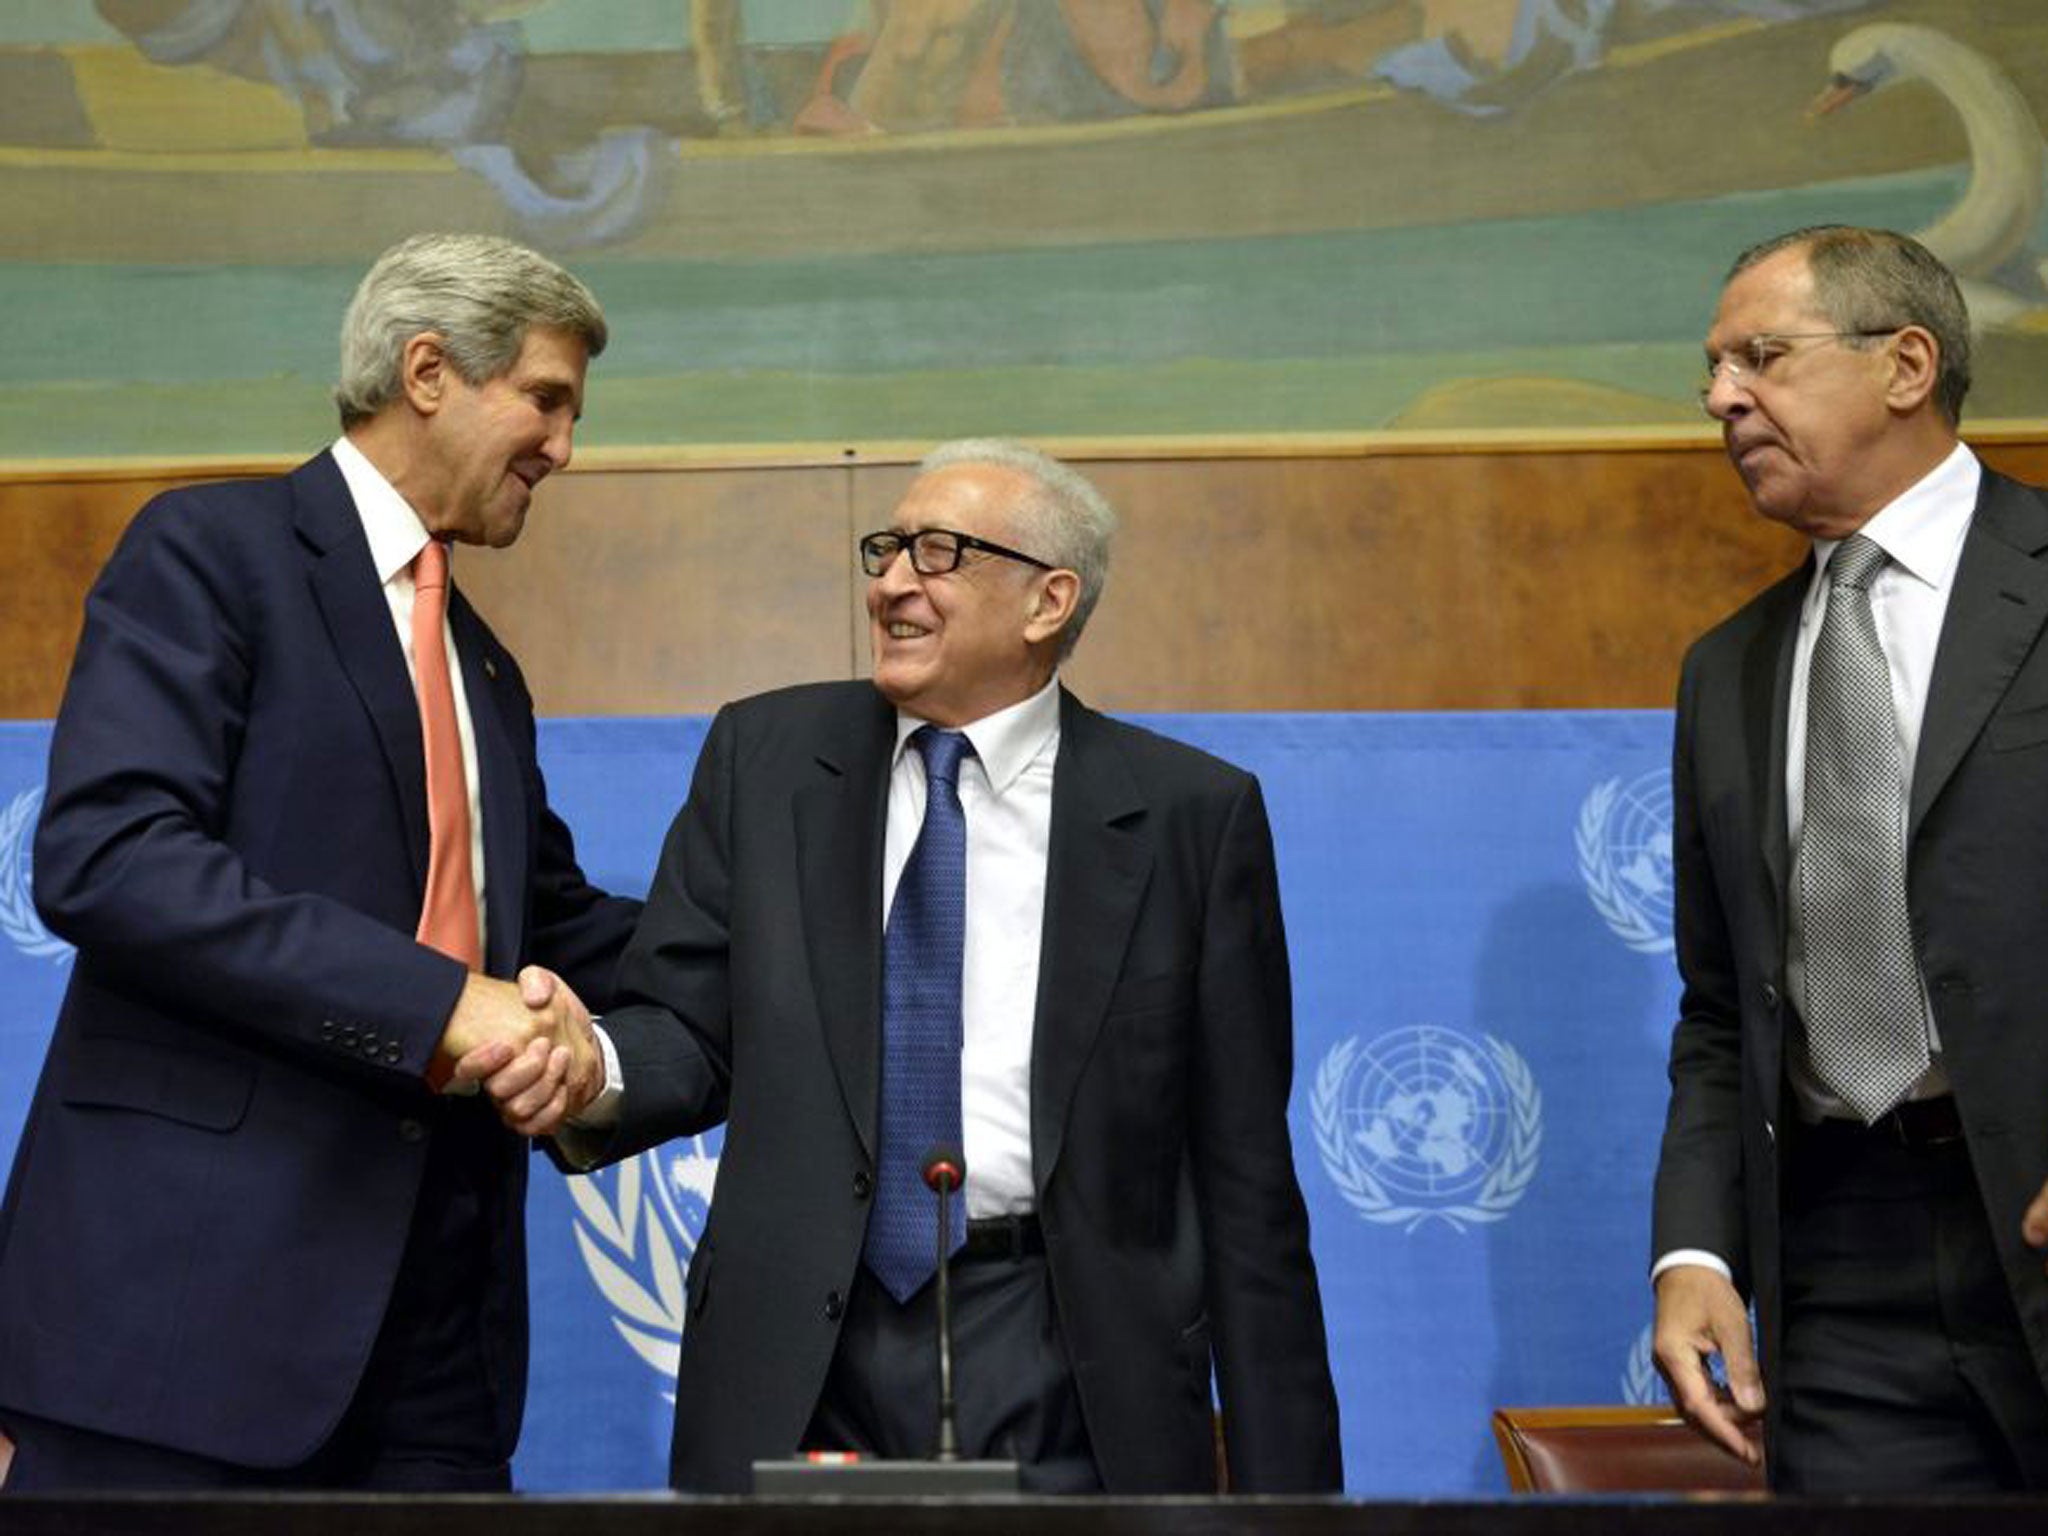 John Kerry shakes hands with Lakhdar Brahimi